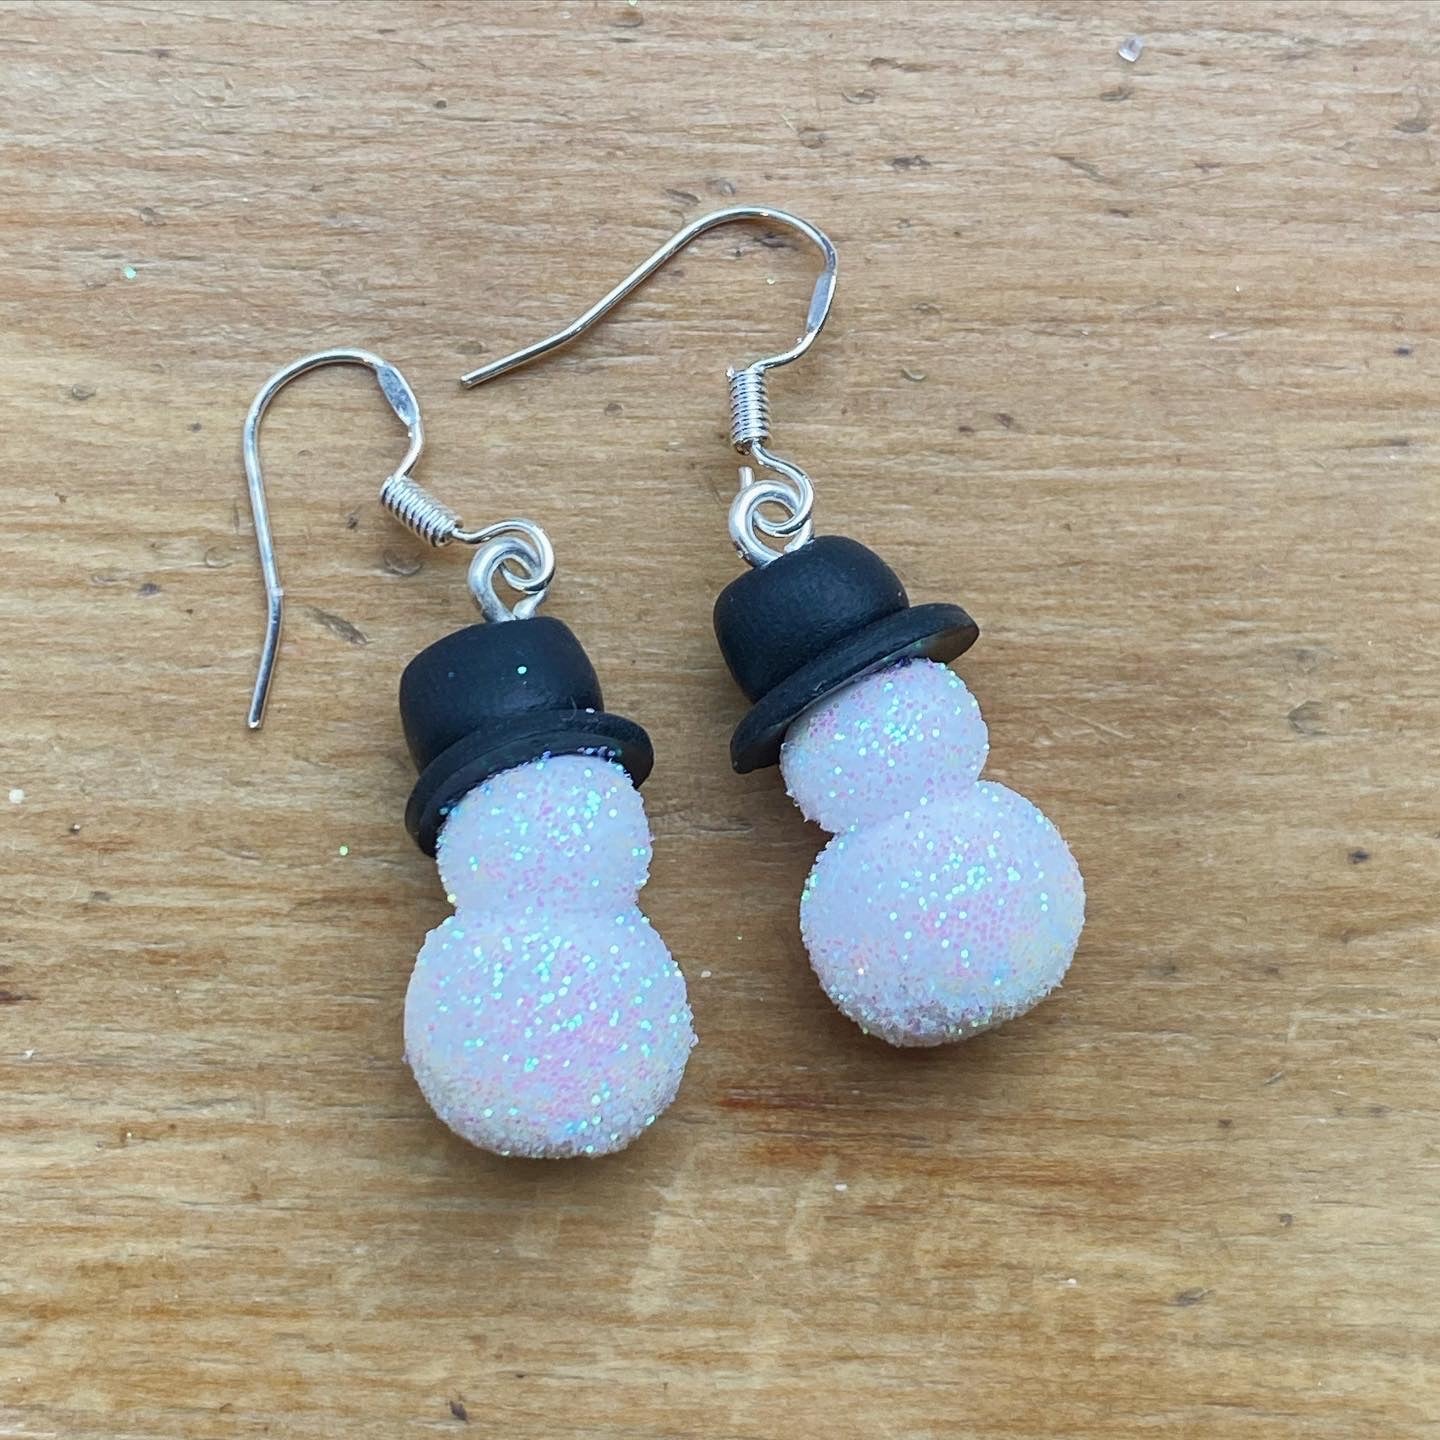 Handmade Earrings | Glittered Snowman Christmas | Polymer Clay